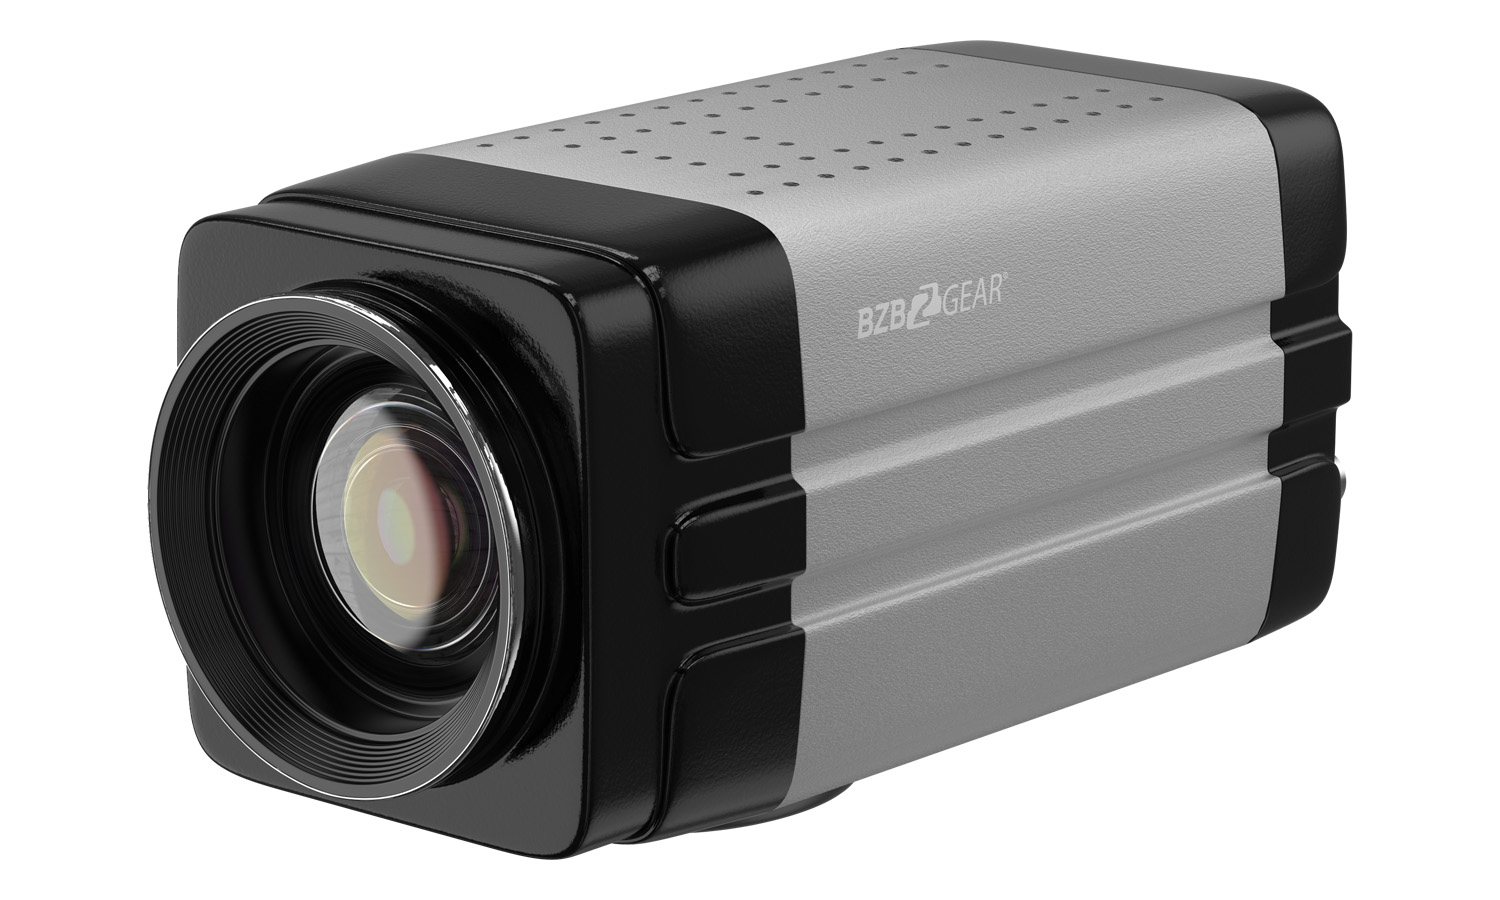 BZBGEAR BG-B20SA 1080P Full HD 3G-SDI 20X Zoom Box Camera with Audio Input